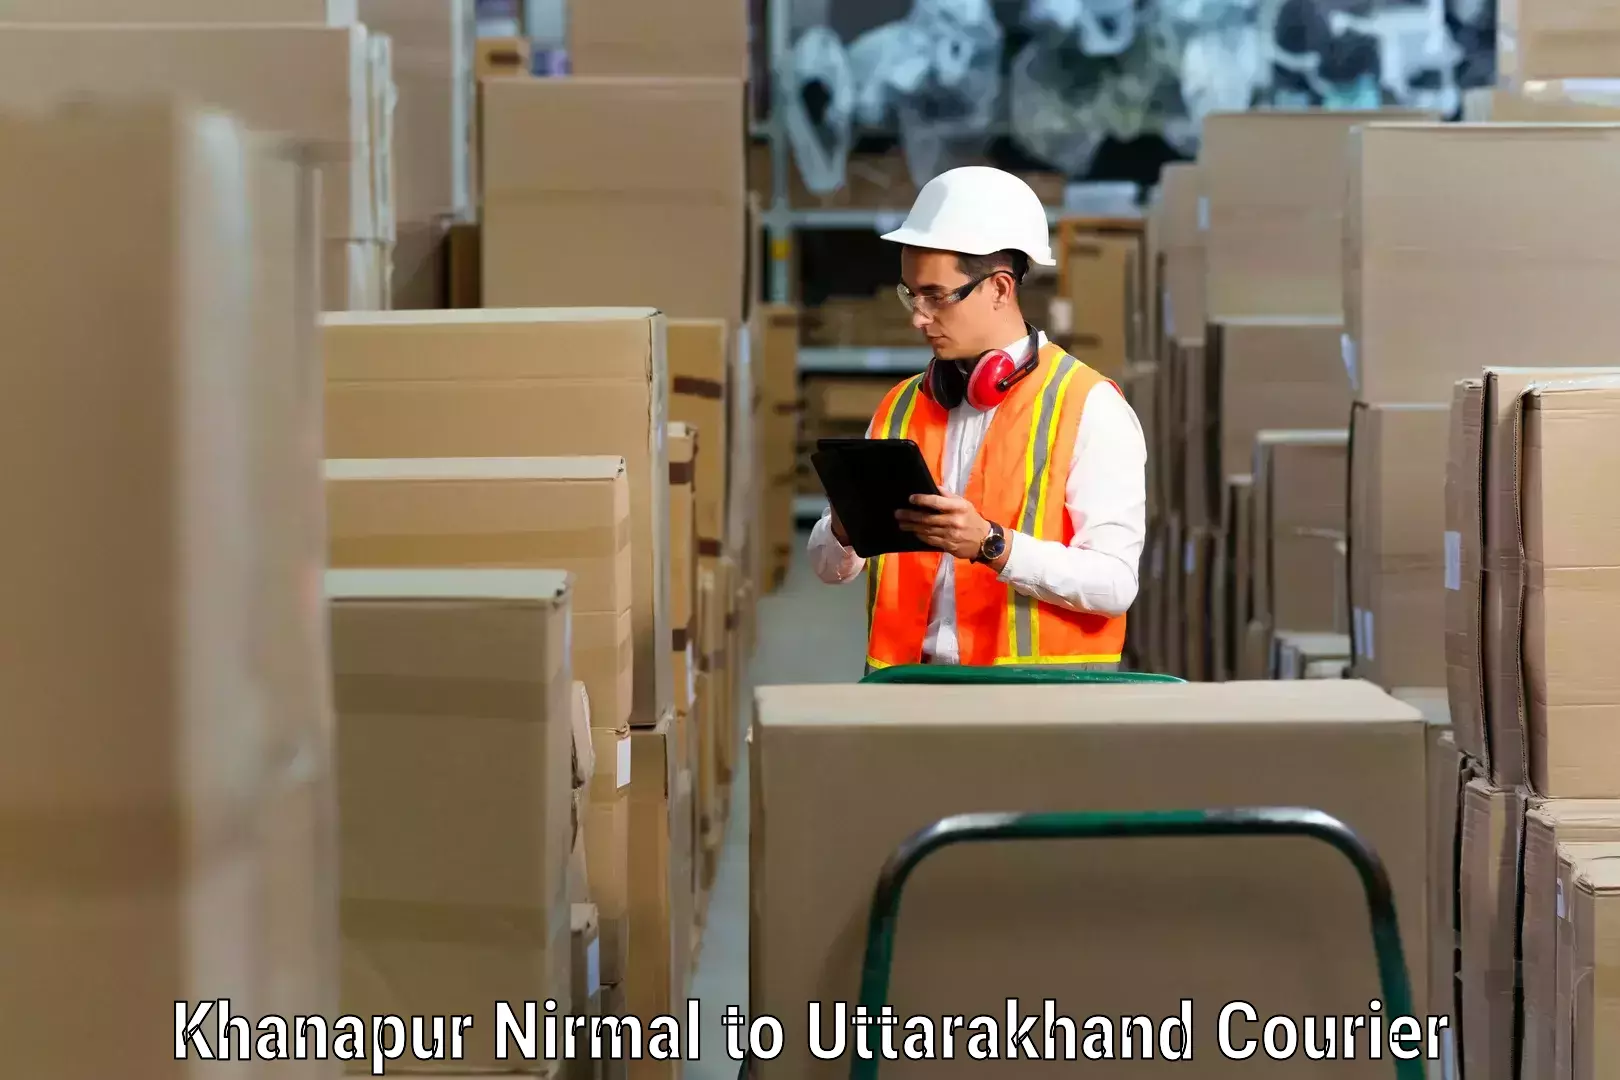 Furniture transport company Khanapur Nirmal to Dehradun